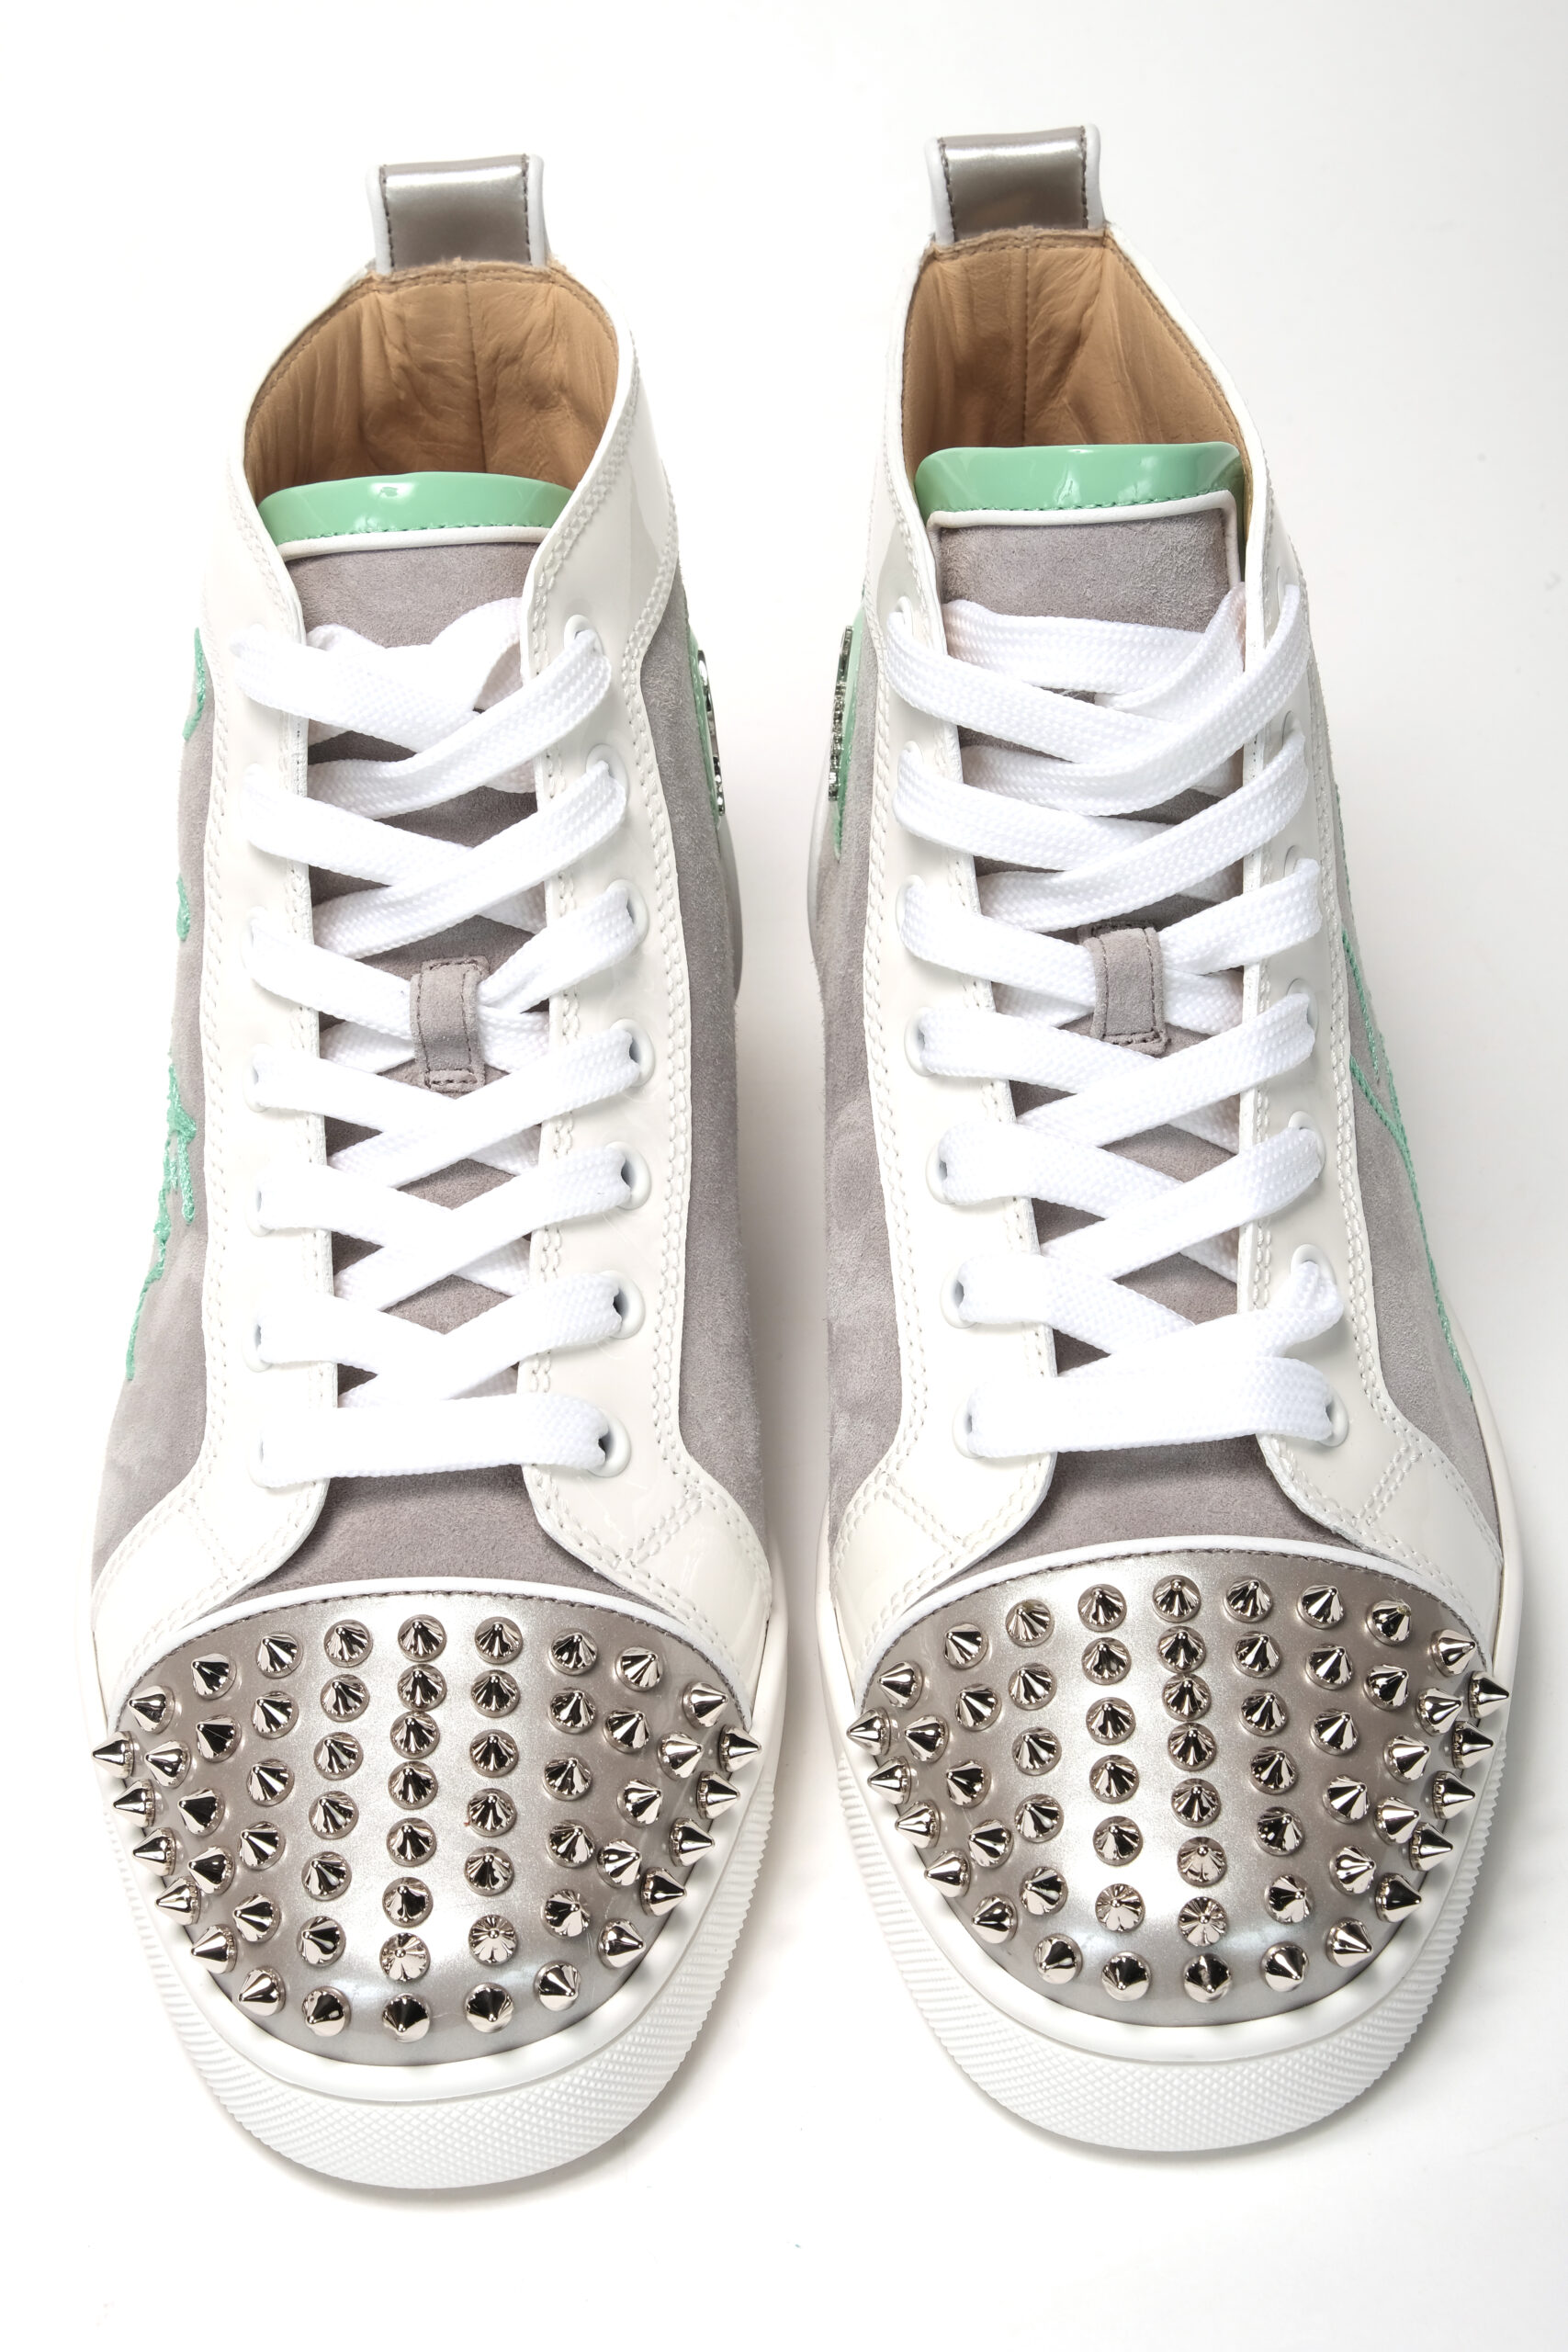 Christian Louboutin Women's Lou Spikes Fashion Sneakers Shoes US 9.5 IT  39.5 